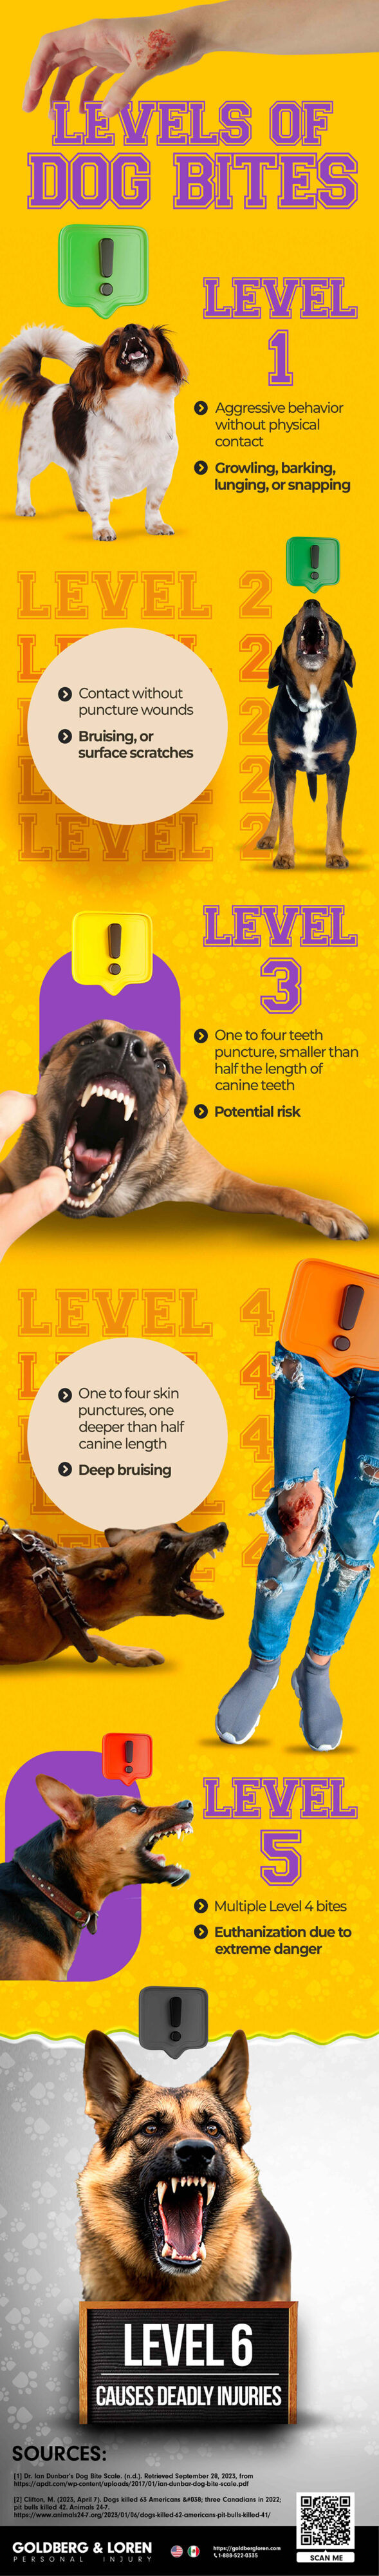 Levels of Dog Bites Infographic